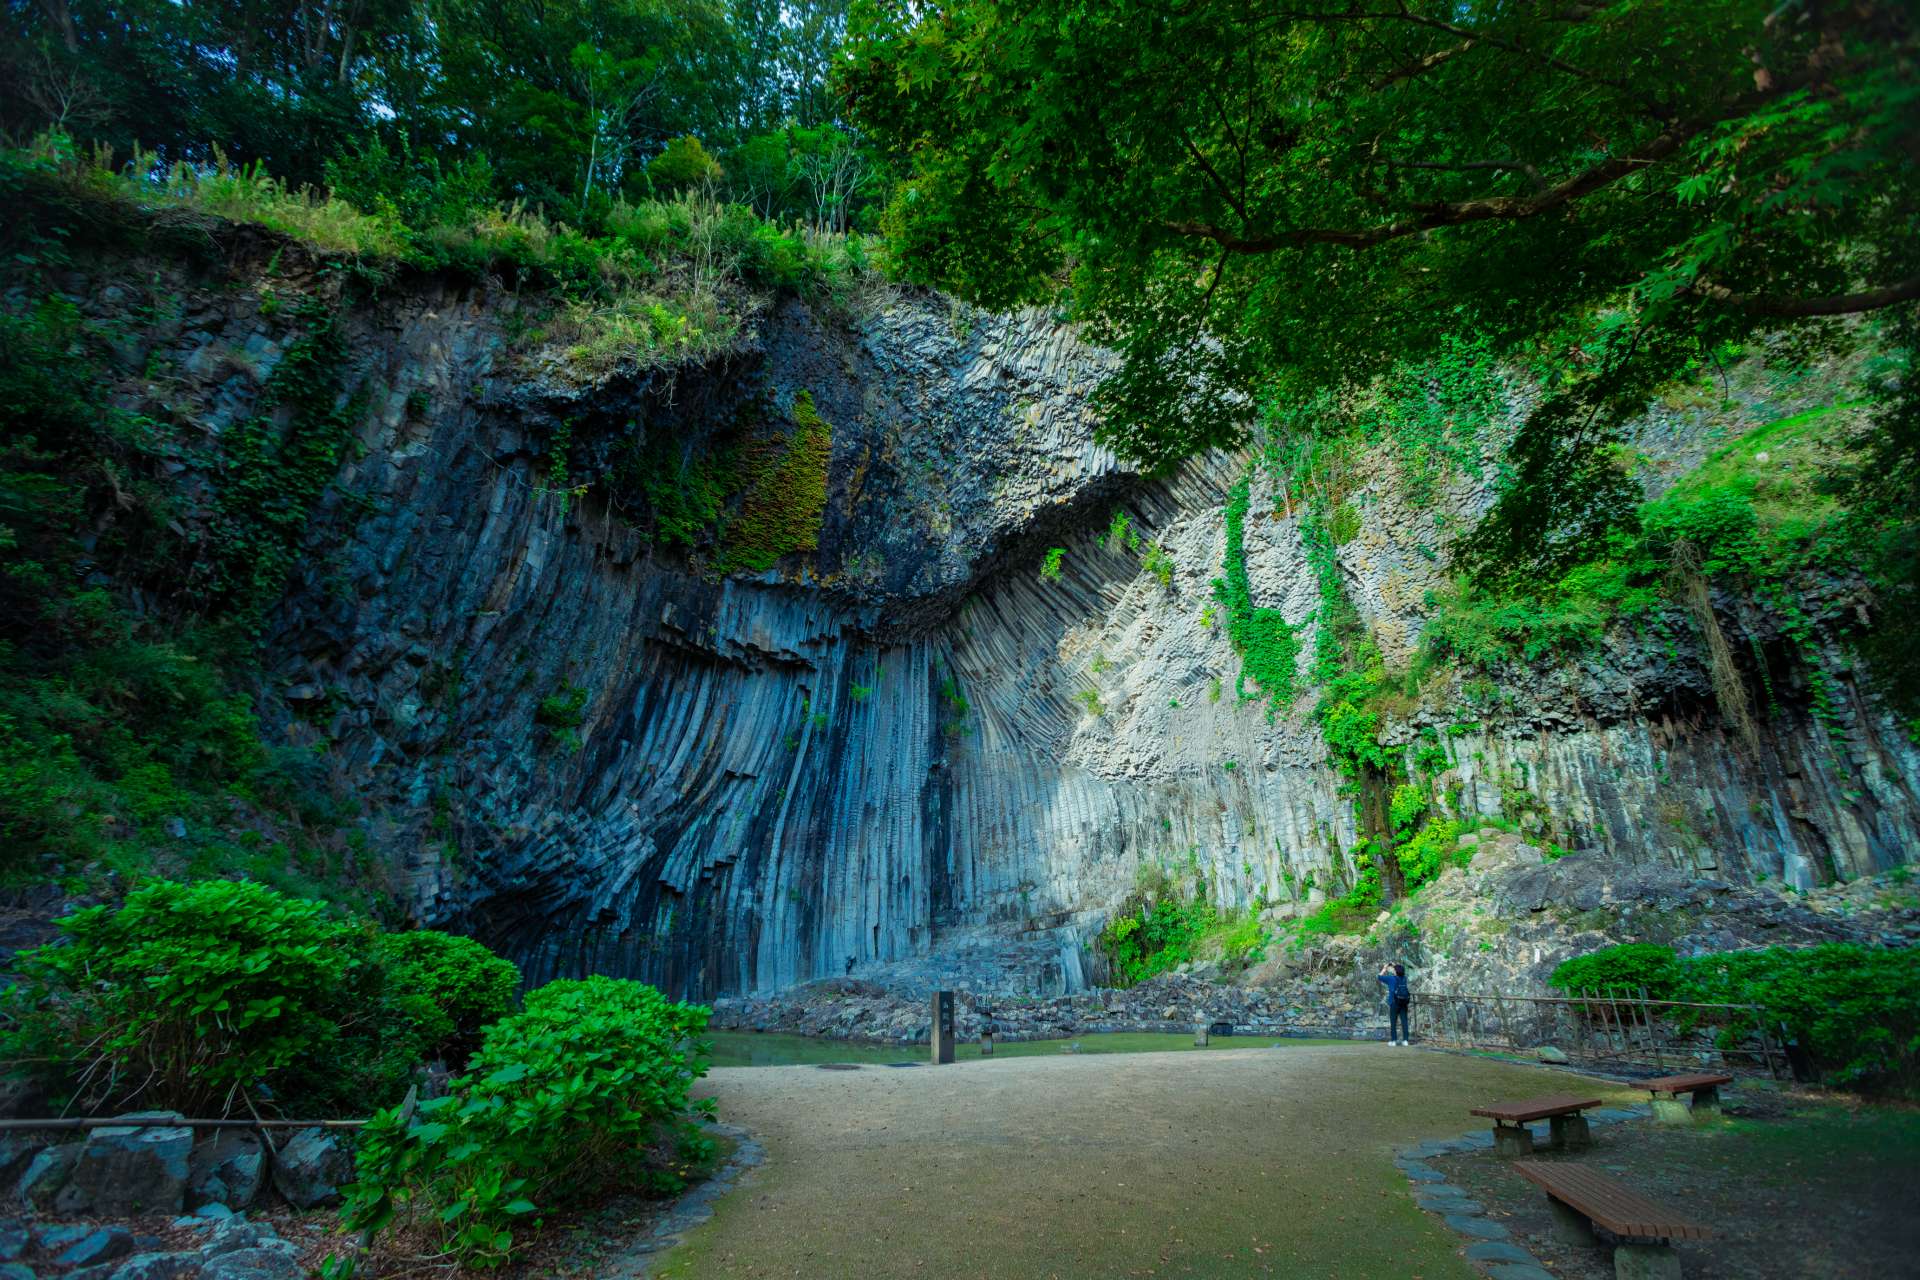 In Genbudo Park, there also are Seiryudo cave, Byakkodo cave, and Suzakudo cave.